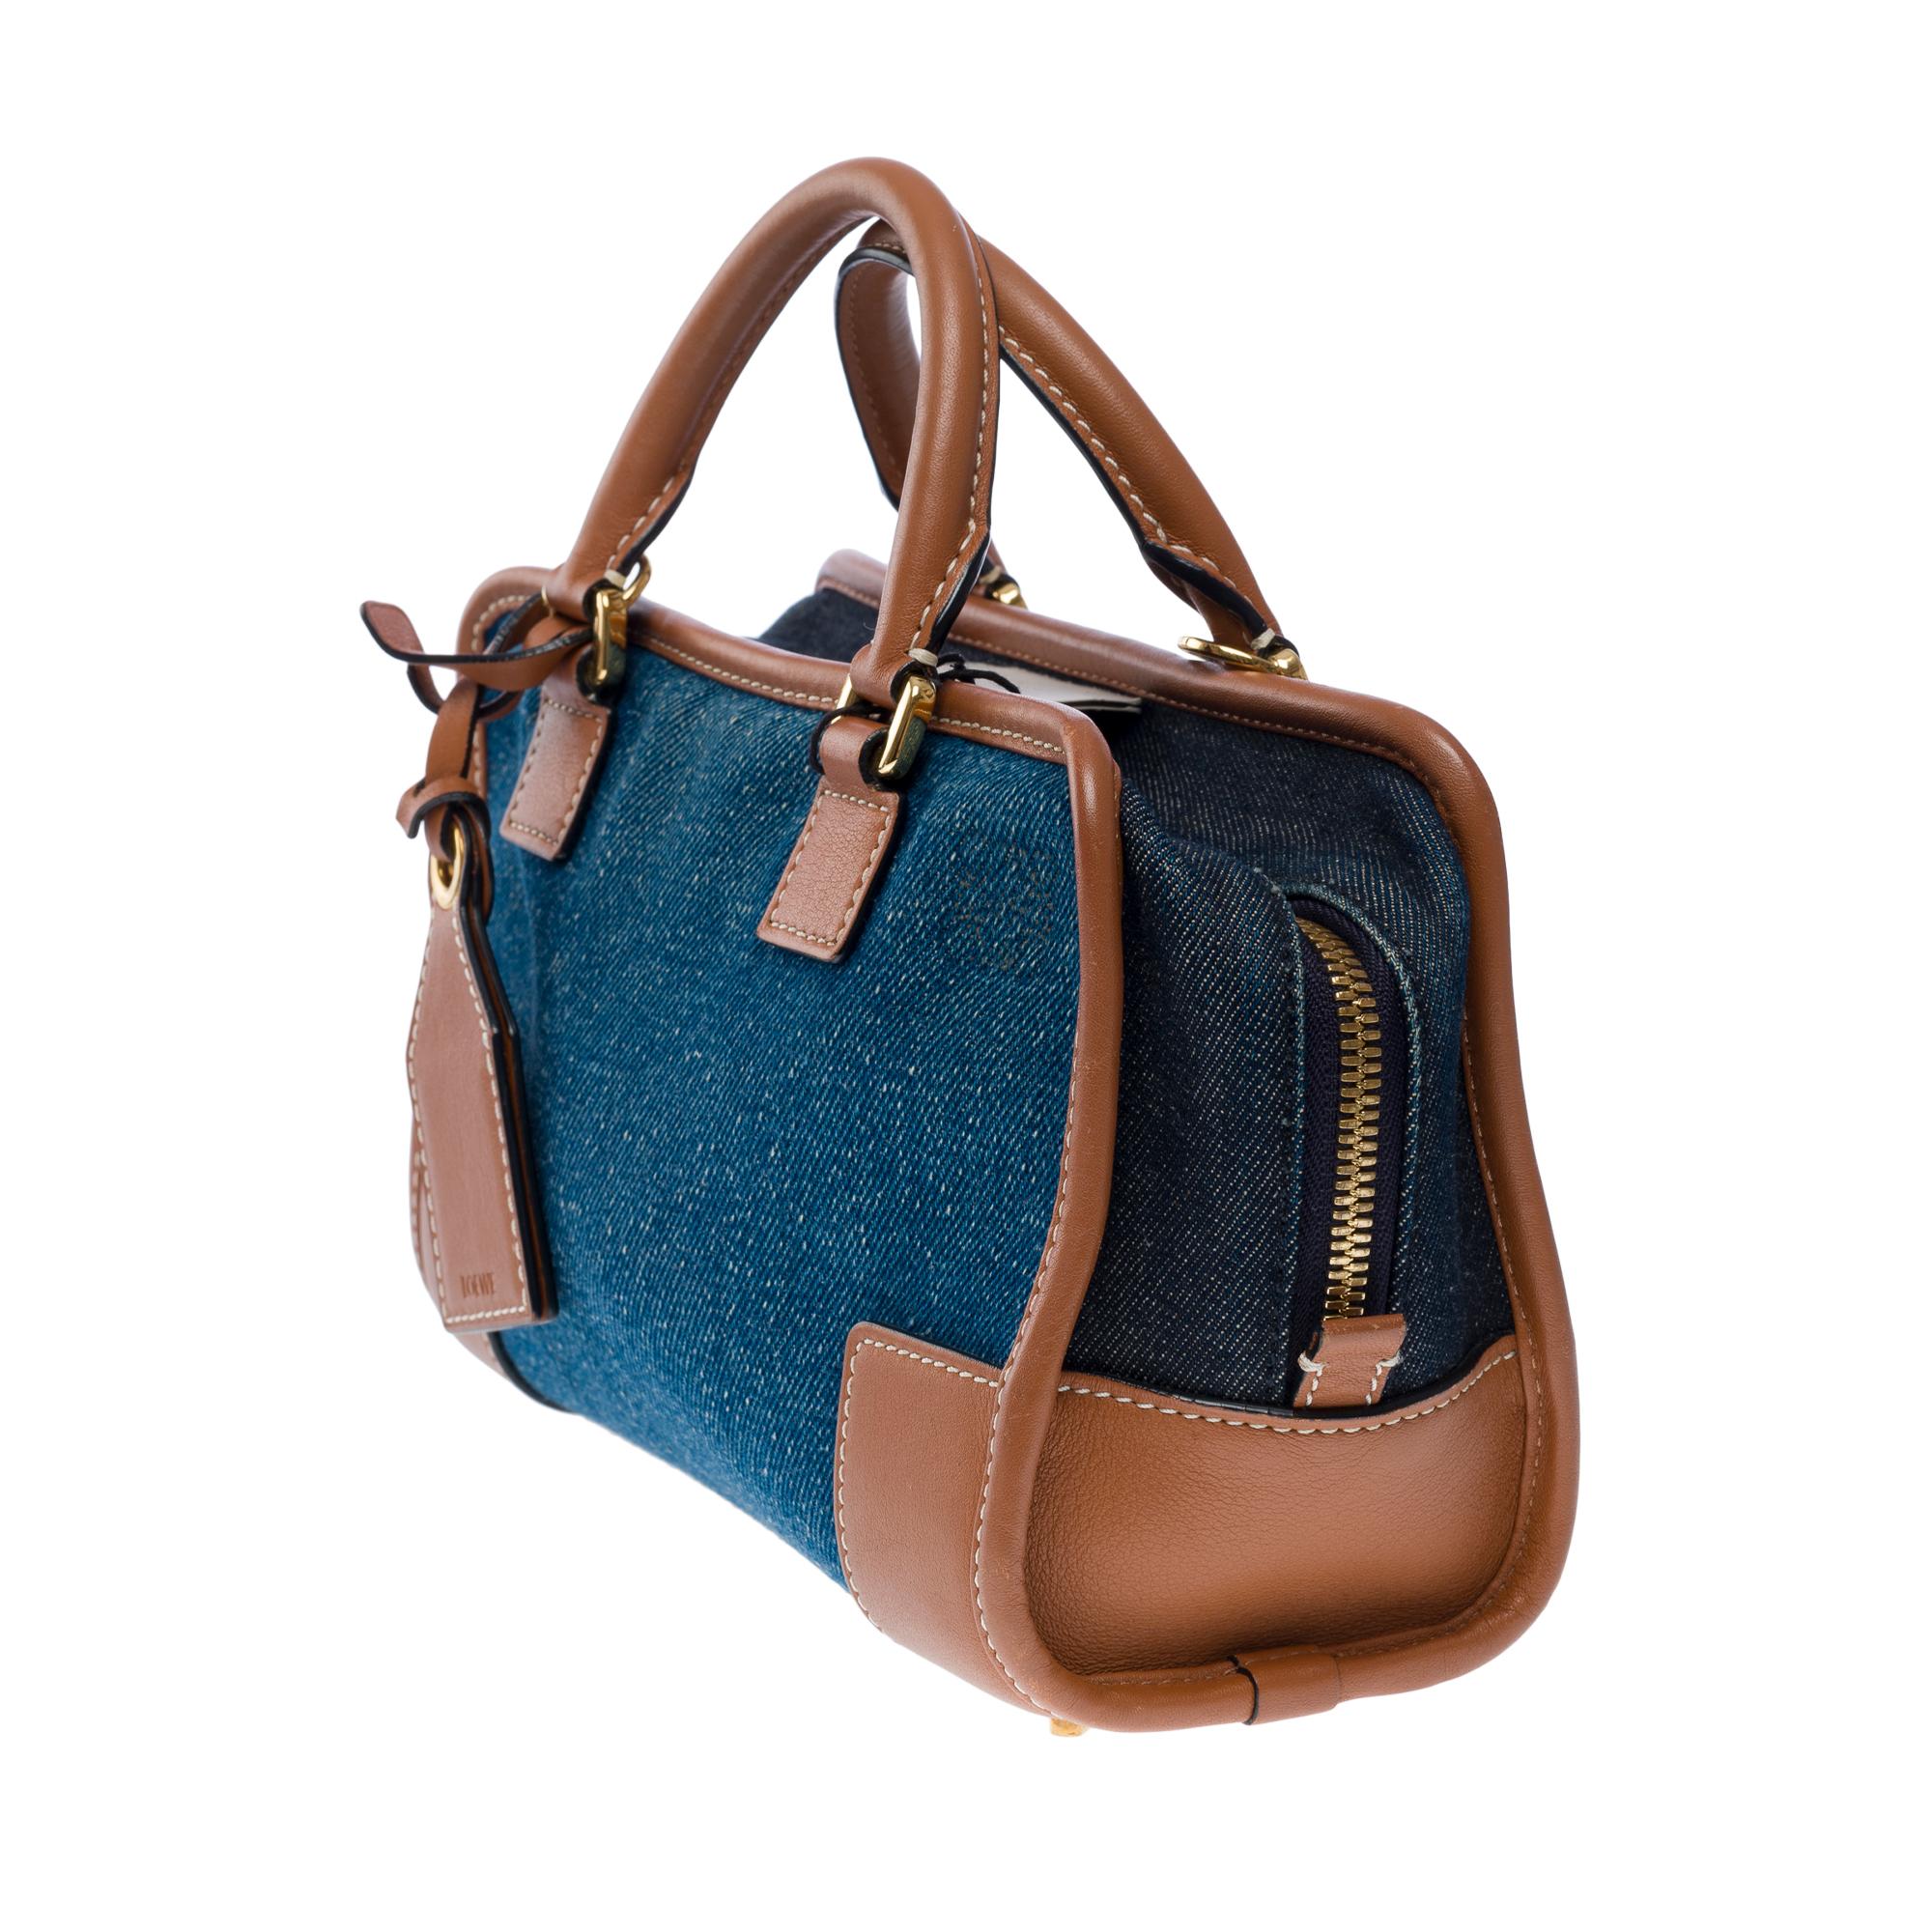 Loewe Amazona 23 2 Way handbag in denim and brown leather, GHW 1